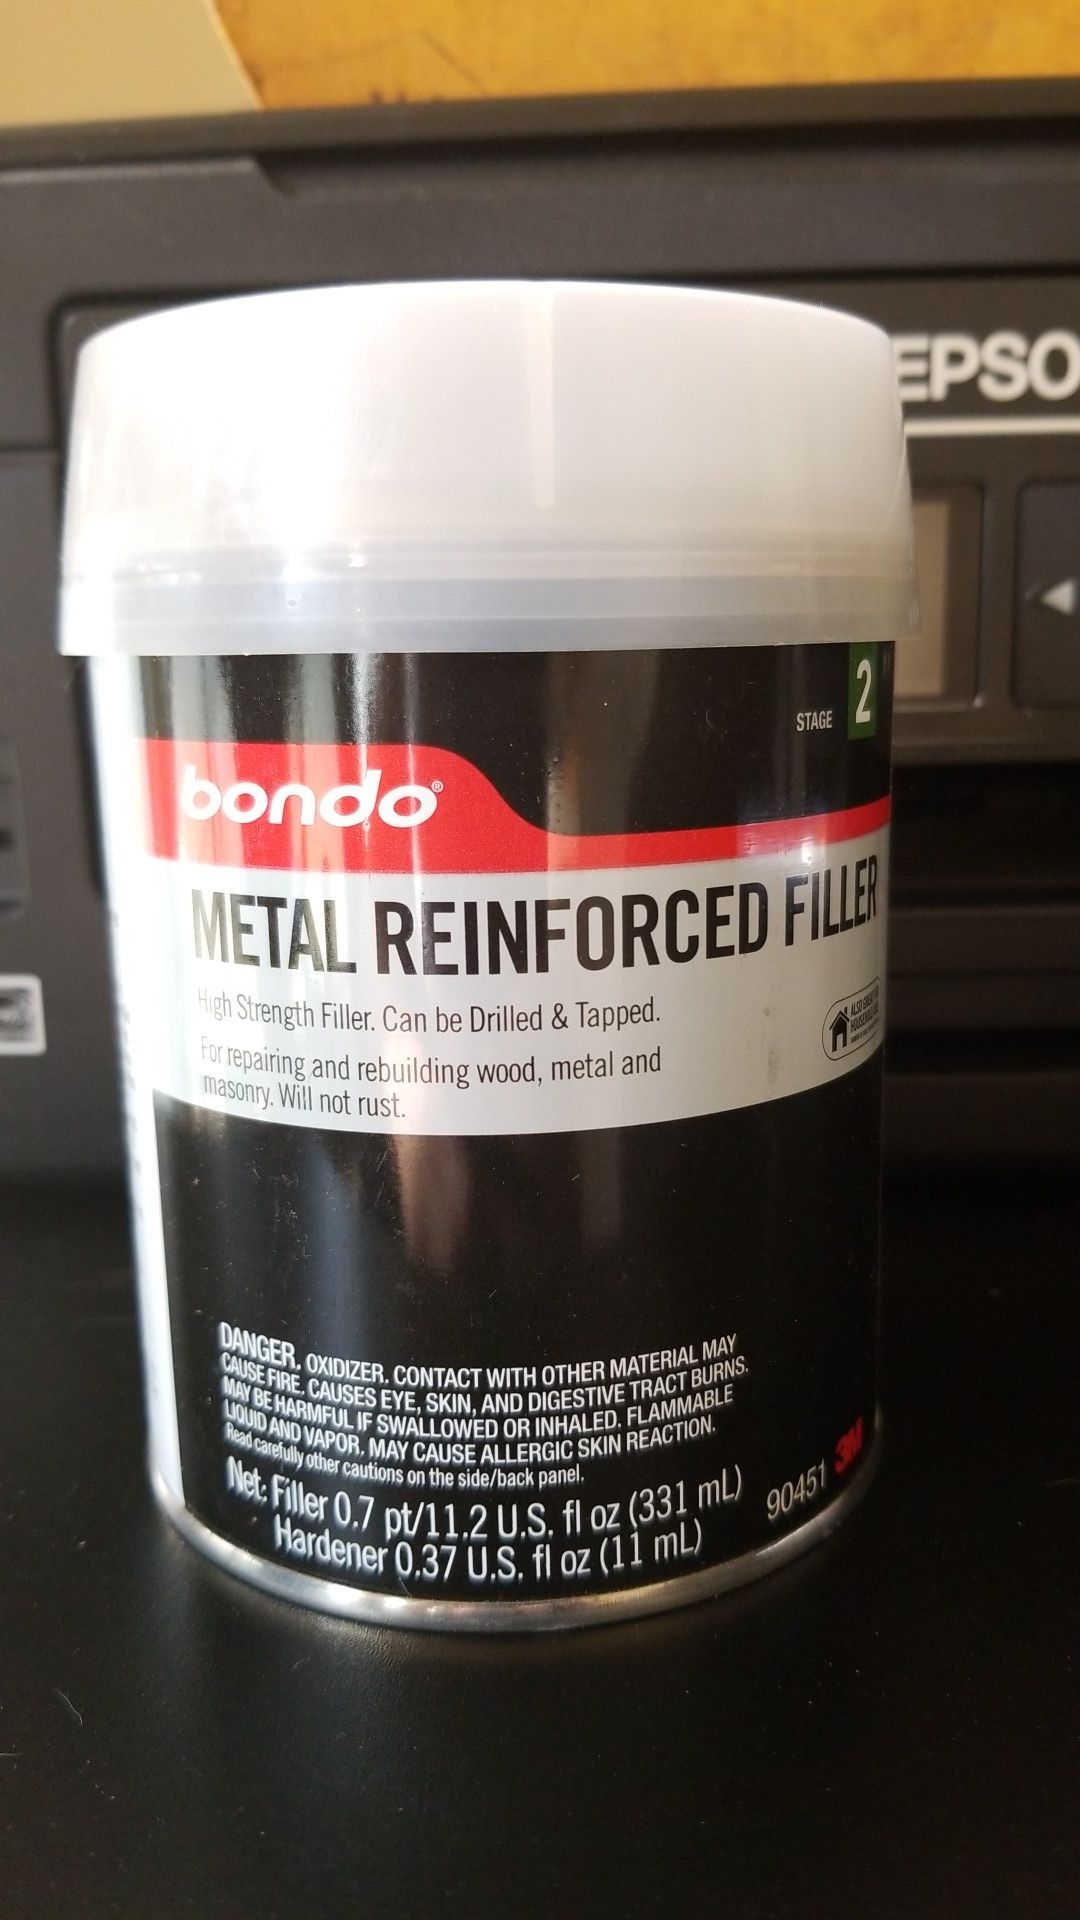 Bondo metal reinforced filler